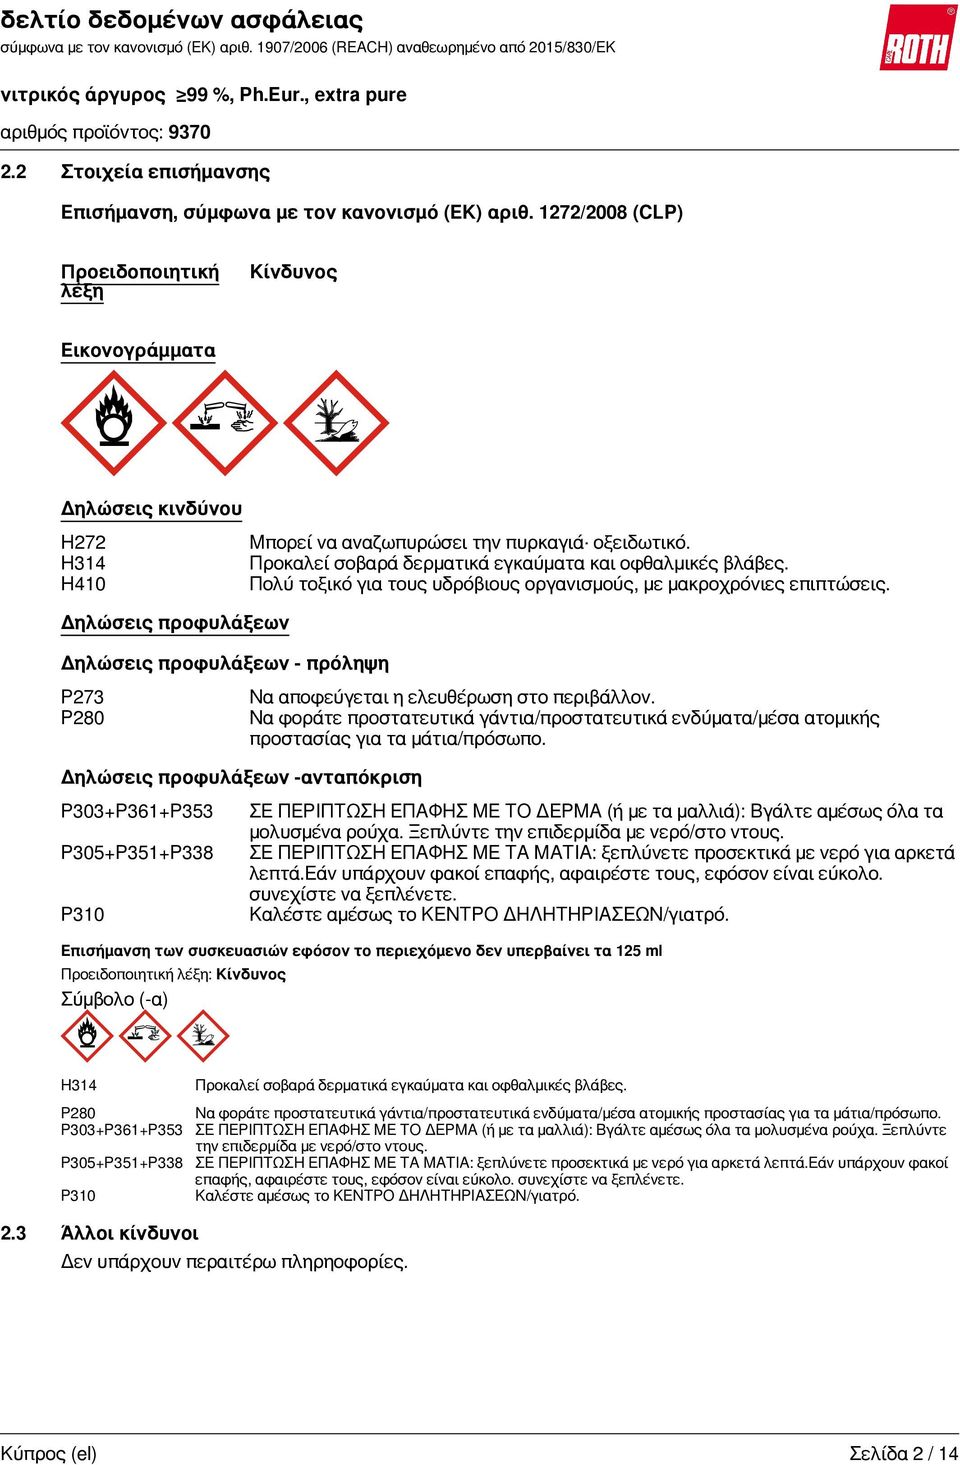 P303+P361+P353 P305+P351+P338 P310 Προειδοποιητική λέξη: Κίνδυνος Σύμβολο (-α) Μπορεί να αναζωπυρώσει την πυρκαγιά οξειδωτικό. Προκαλεί σοβαρά δερματικά εγκαύματα και οφθαλμικές βλάβες.